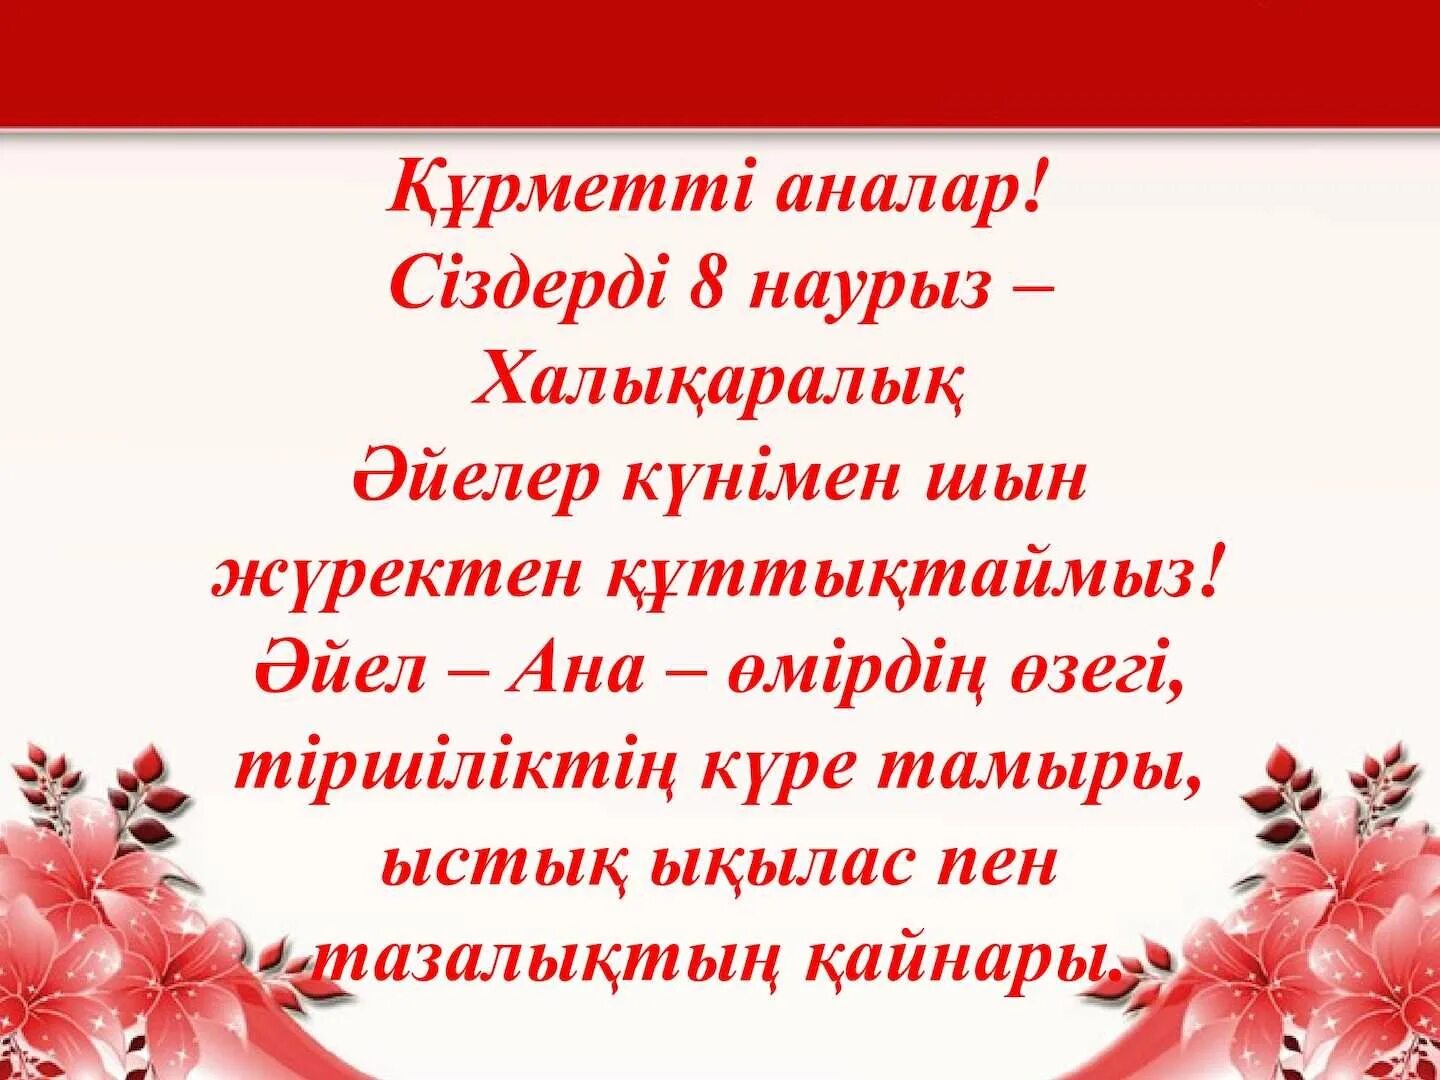 Мама стихи на казахском. 8 Наурыз слайд презентация. 8 Наурыз сценарий. 8 Наурыз открытка. Поздравление маме на казахском языке.